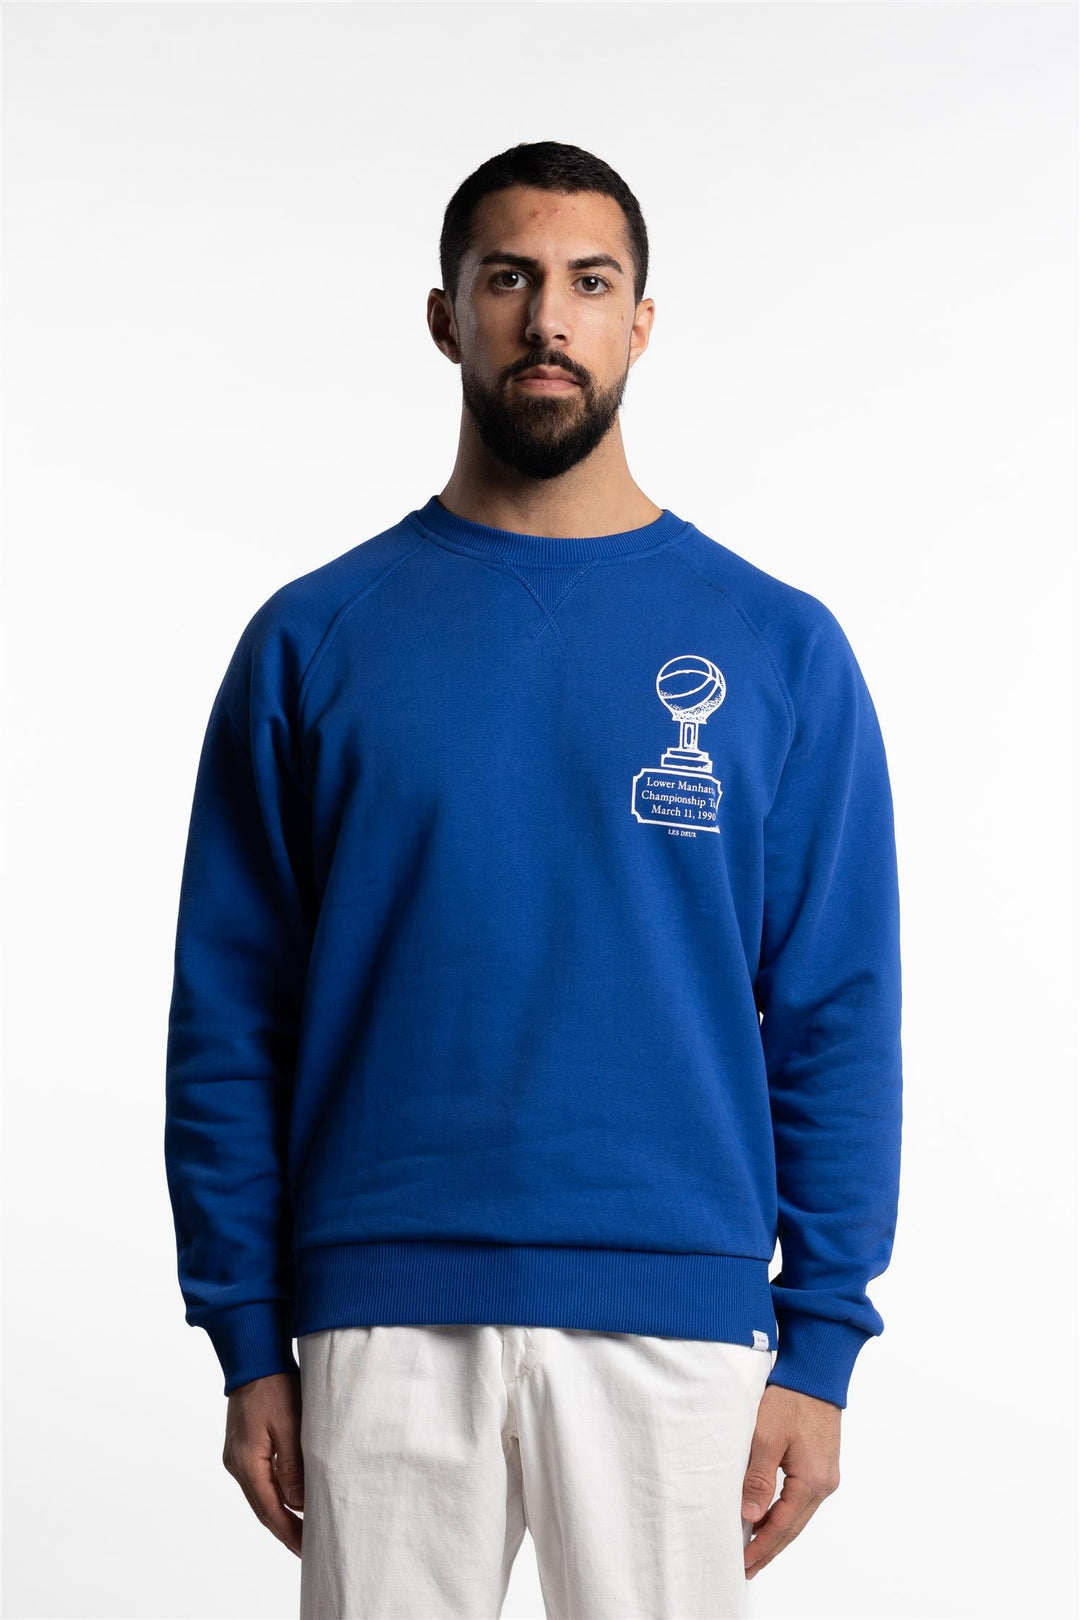 Tournament Sweatshirt Surf Blue/White